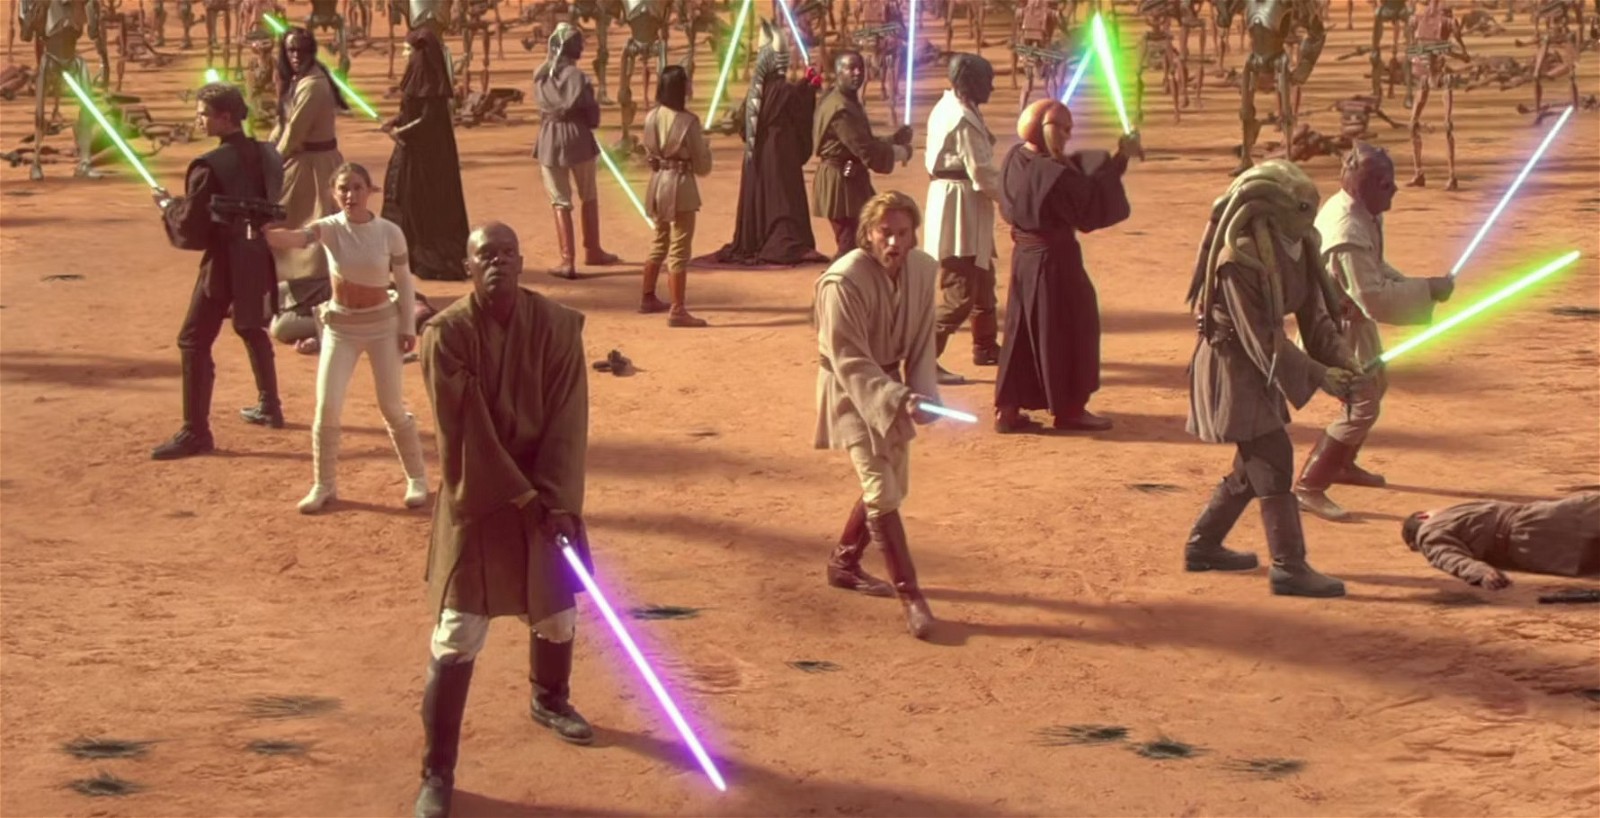 Battle of Geonosis in Star Wars Episode II – Attack of the Clones [Credit 20th Century Studios]